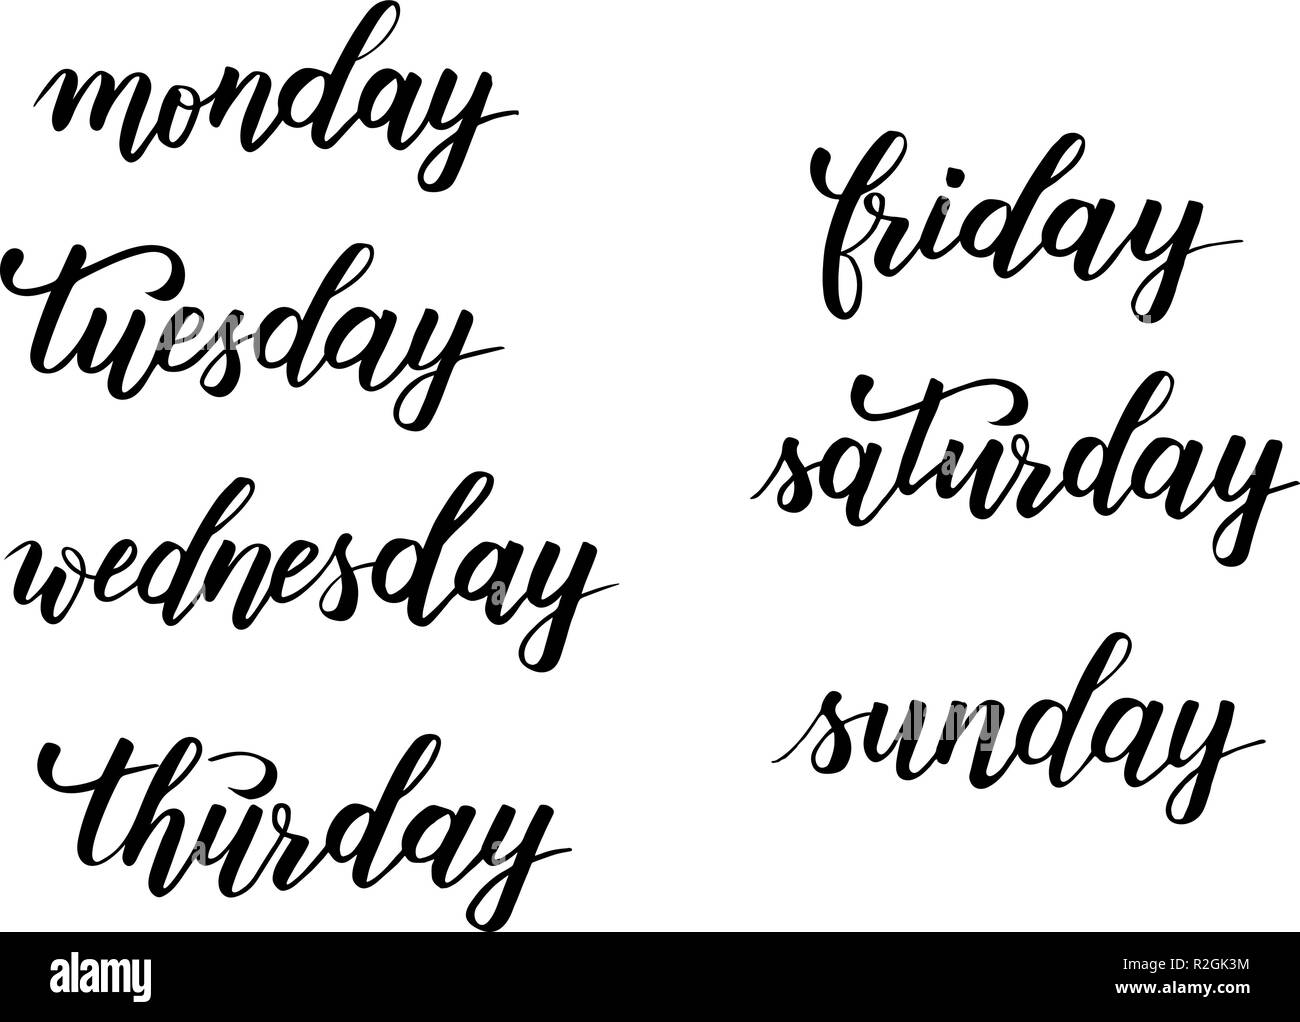 Set Of Weekdays Monday Tuesday Wednesday Thursday Friday Saturday Sunday  Stock Illustration - Download Image Now - iStock